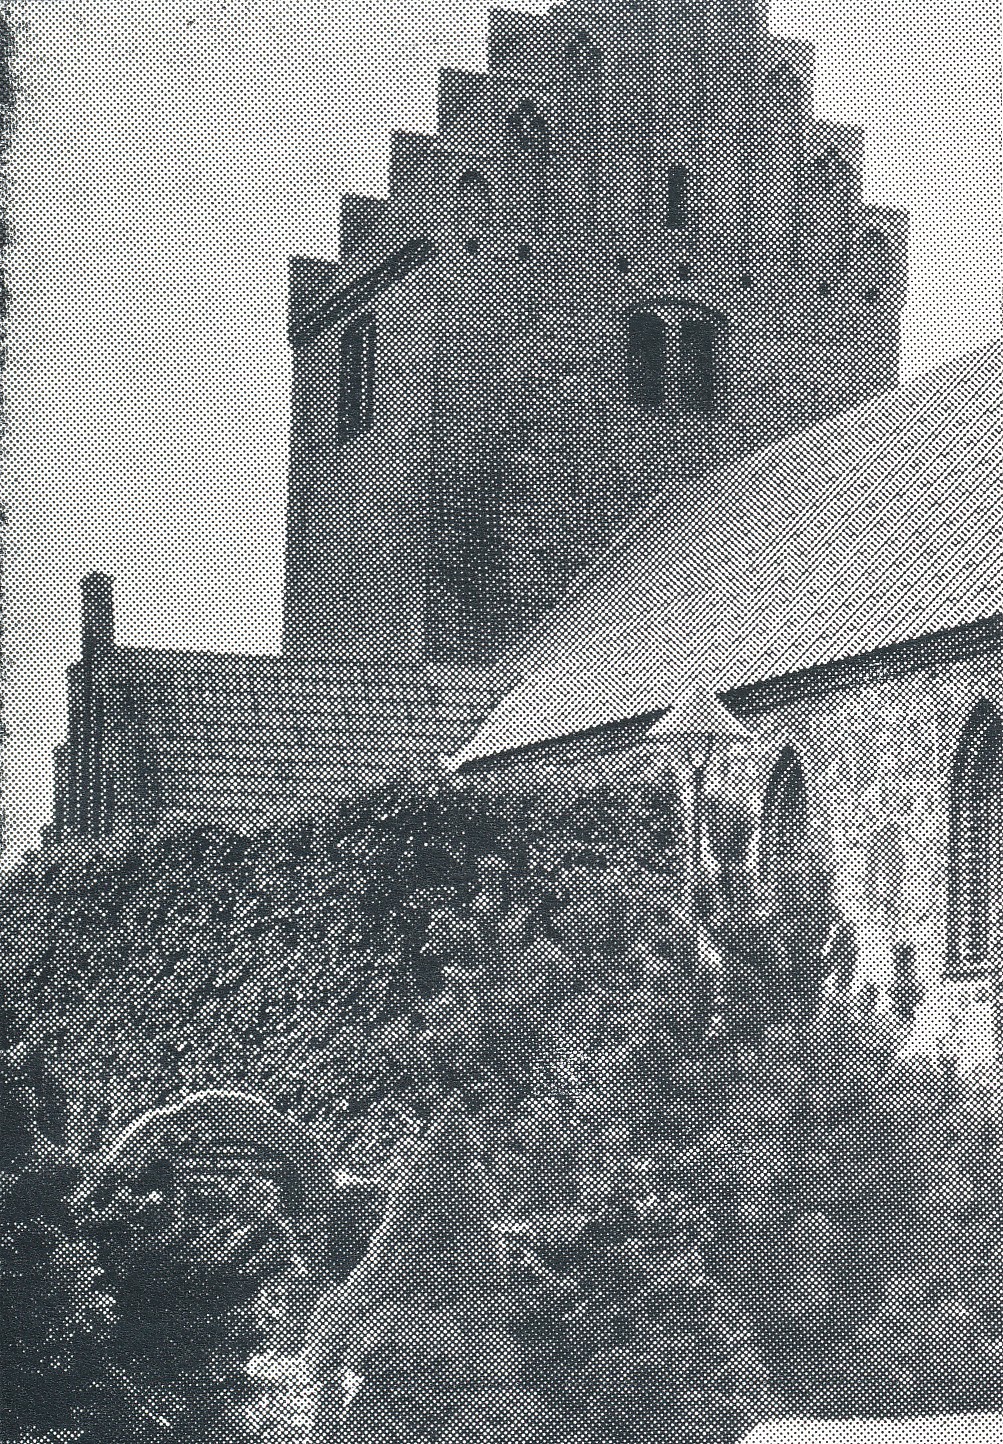 Egebjerg Kirke - 26. oktober 1967 (B7280)